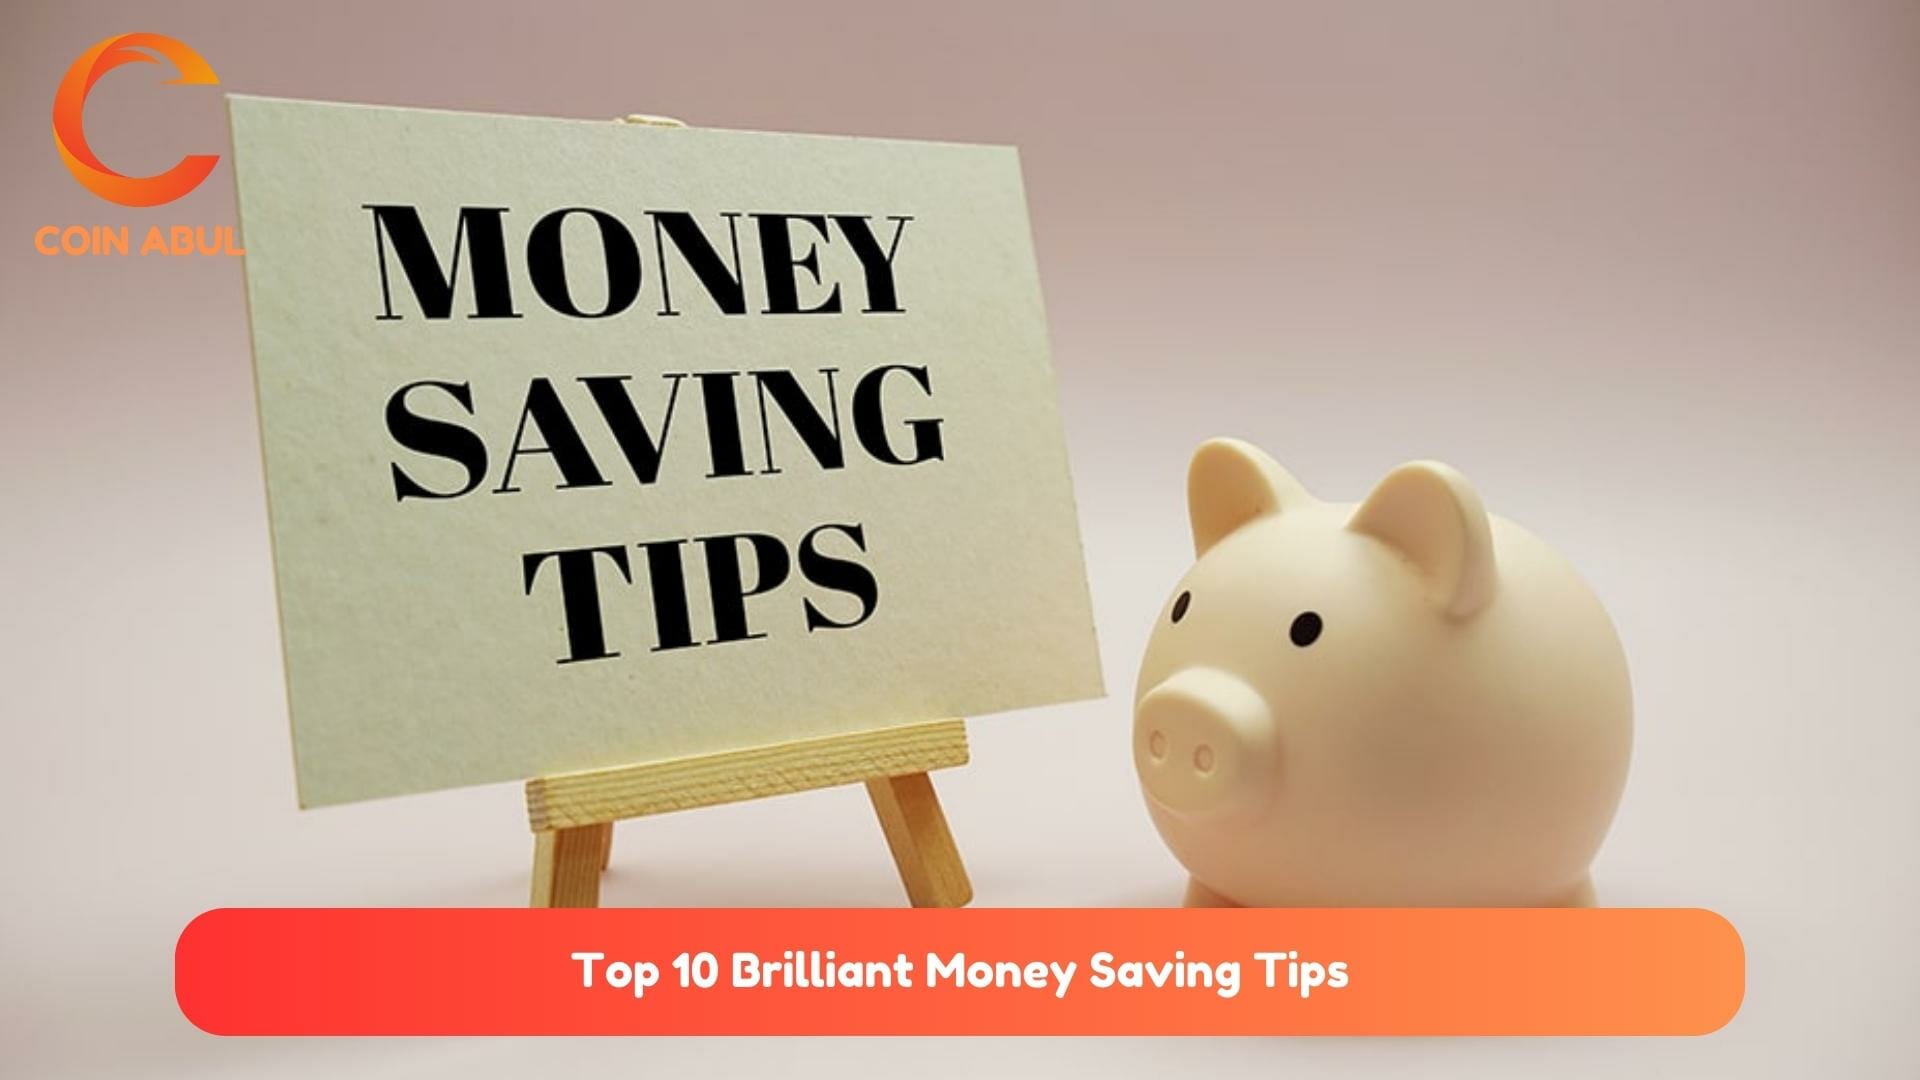 Top 10 Brilliant Money Saving Tips